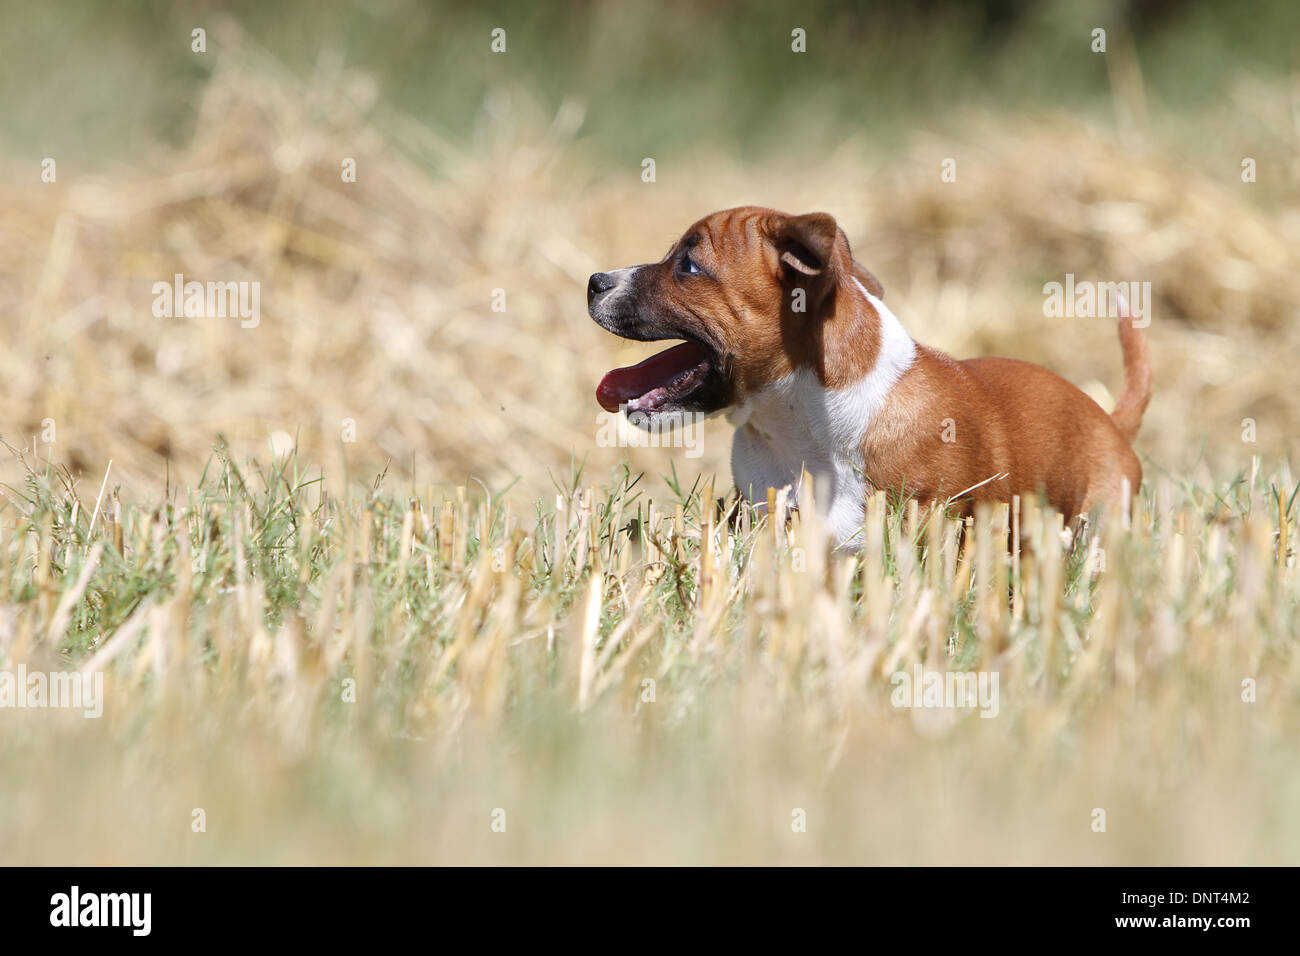 dog Staffordshire Bull Terrier / Staffie  puppy running in a field Stock Photo